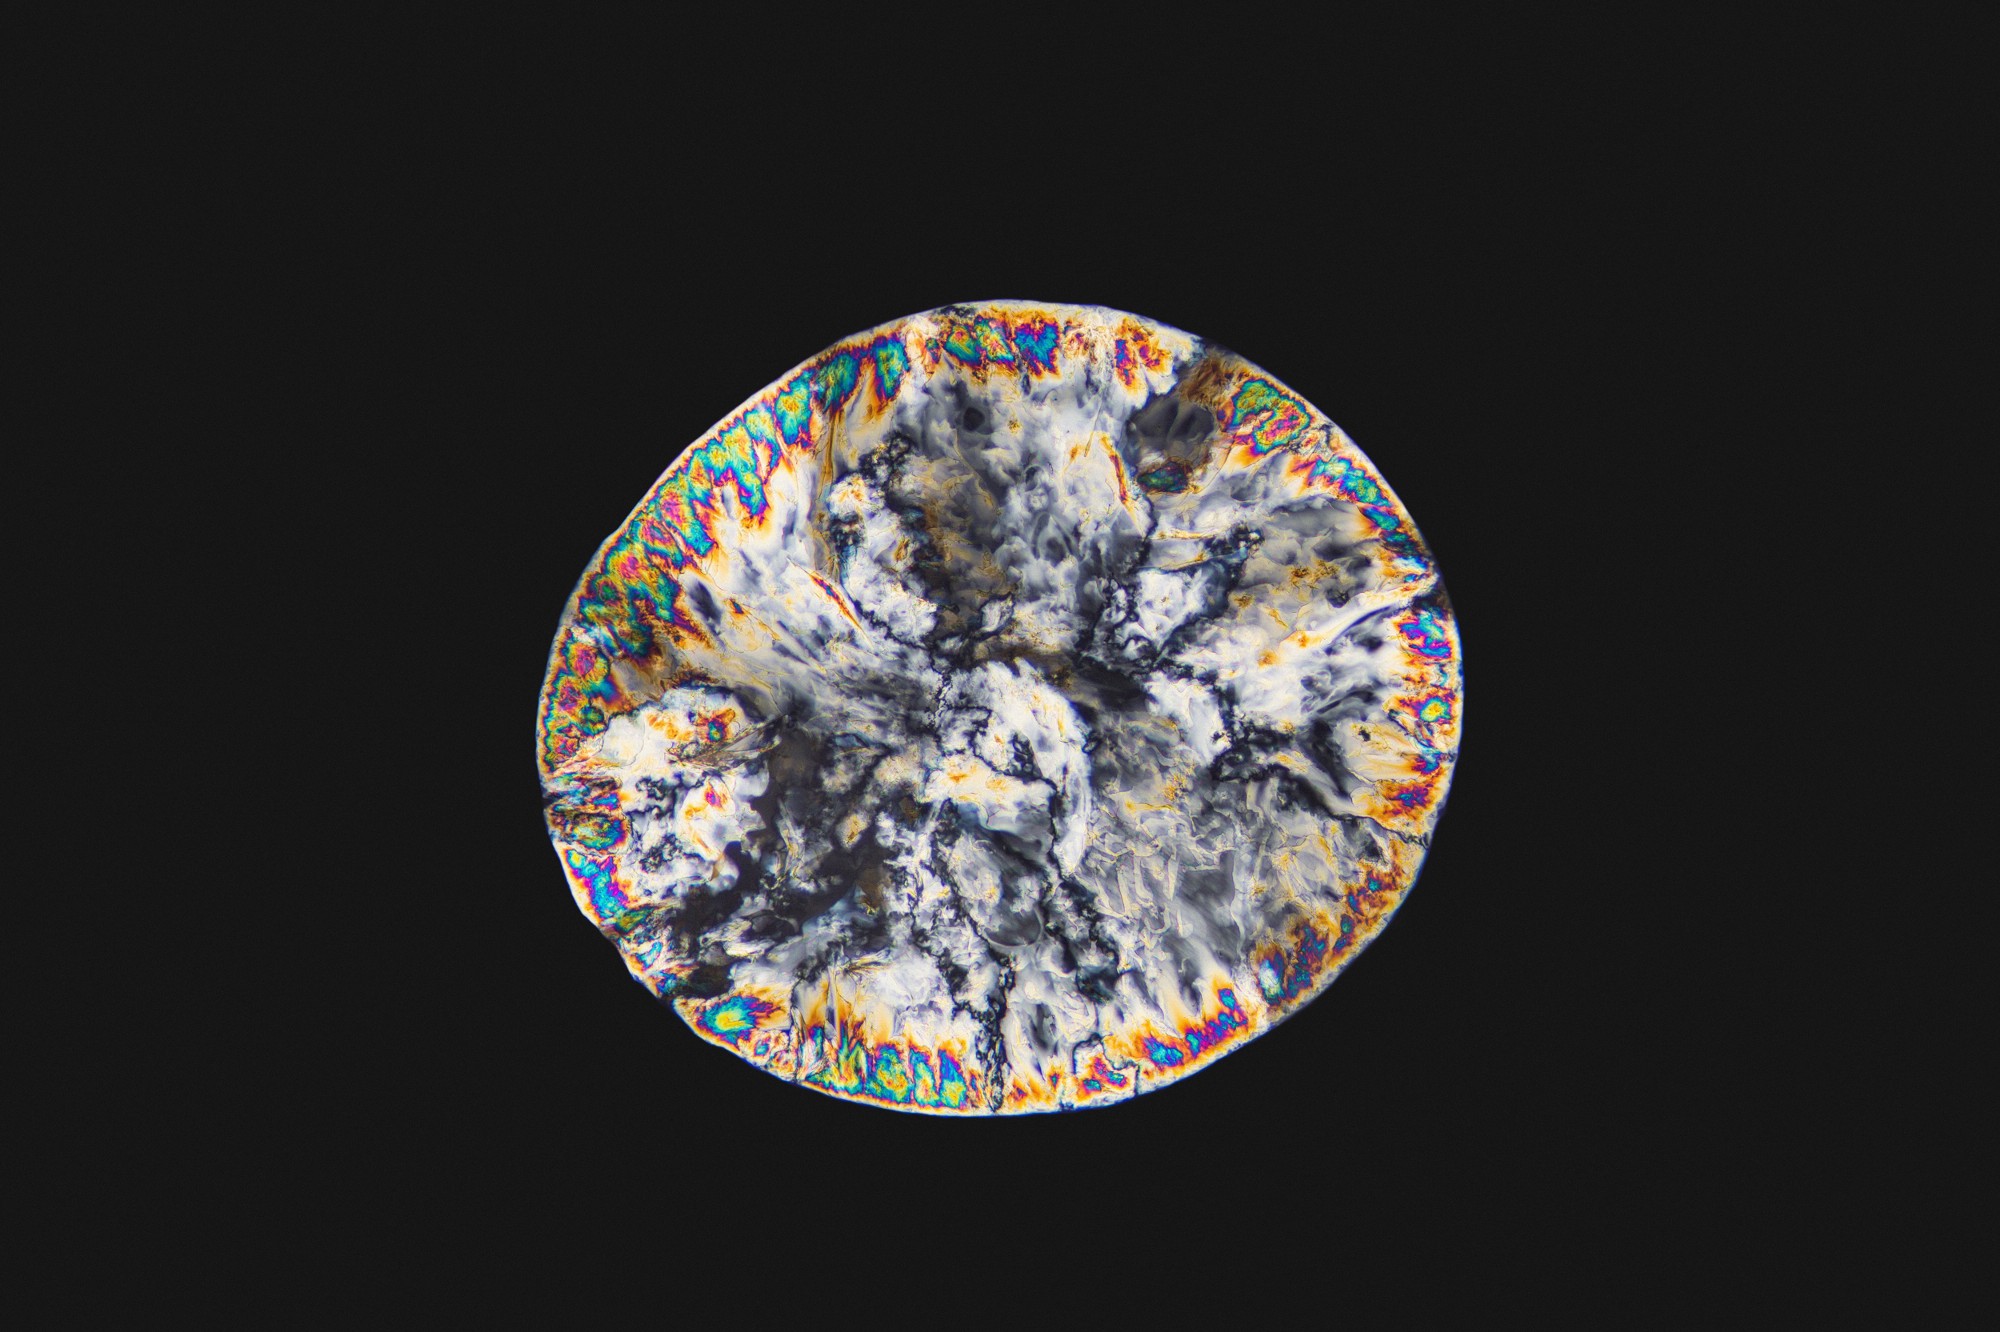 ∢ 2C-B Crystals ∅ Cross polarisation microscope with 200x enlargement.